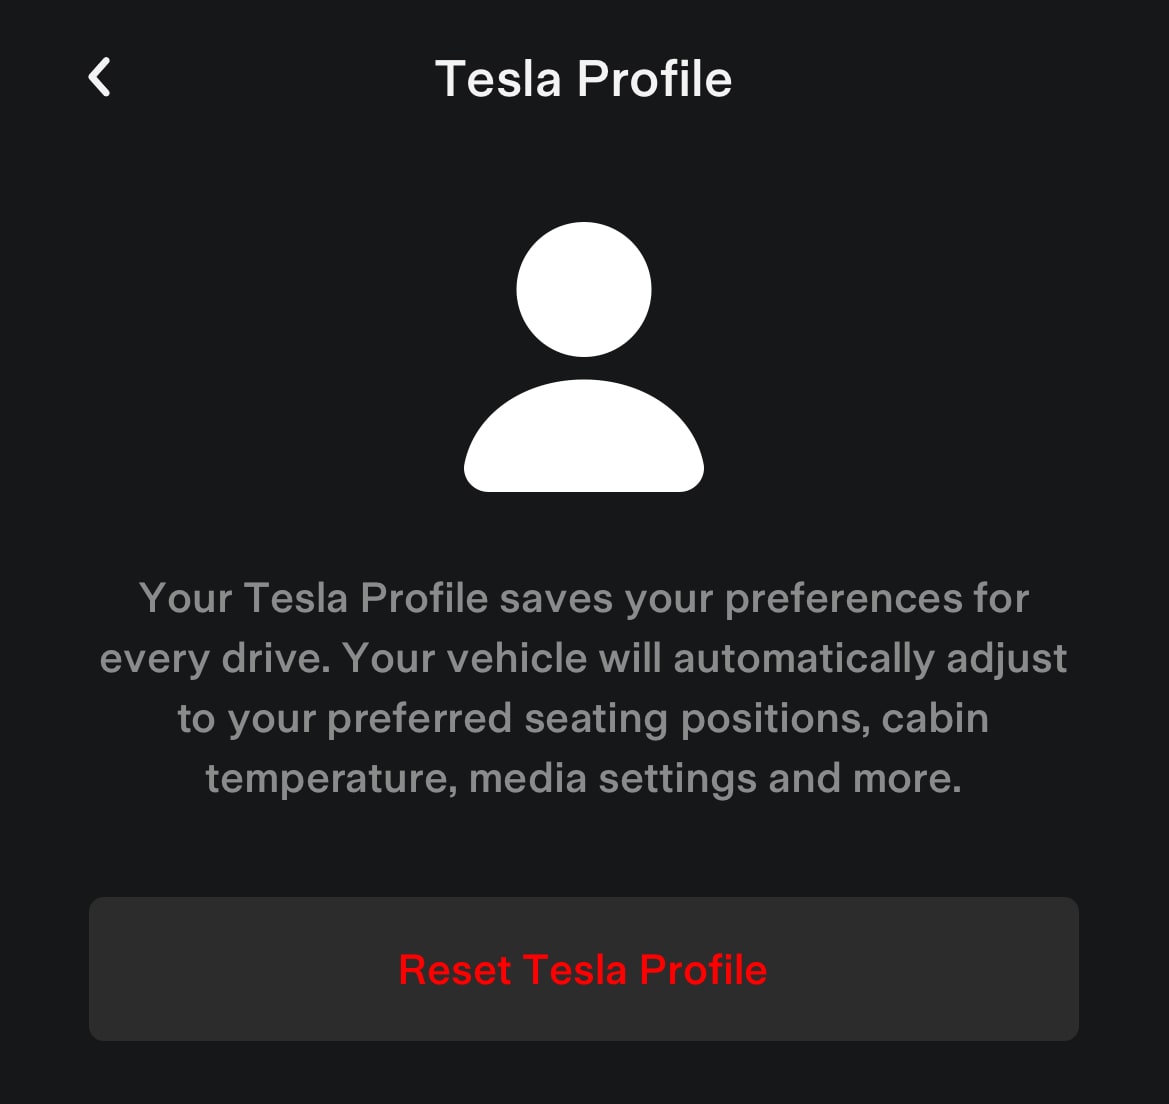 Tesla Reset Tesla Profile feature in update 4.23